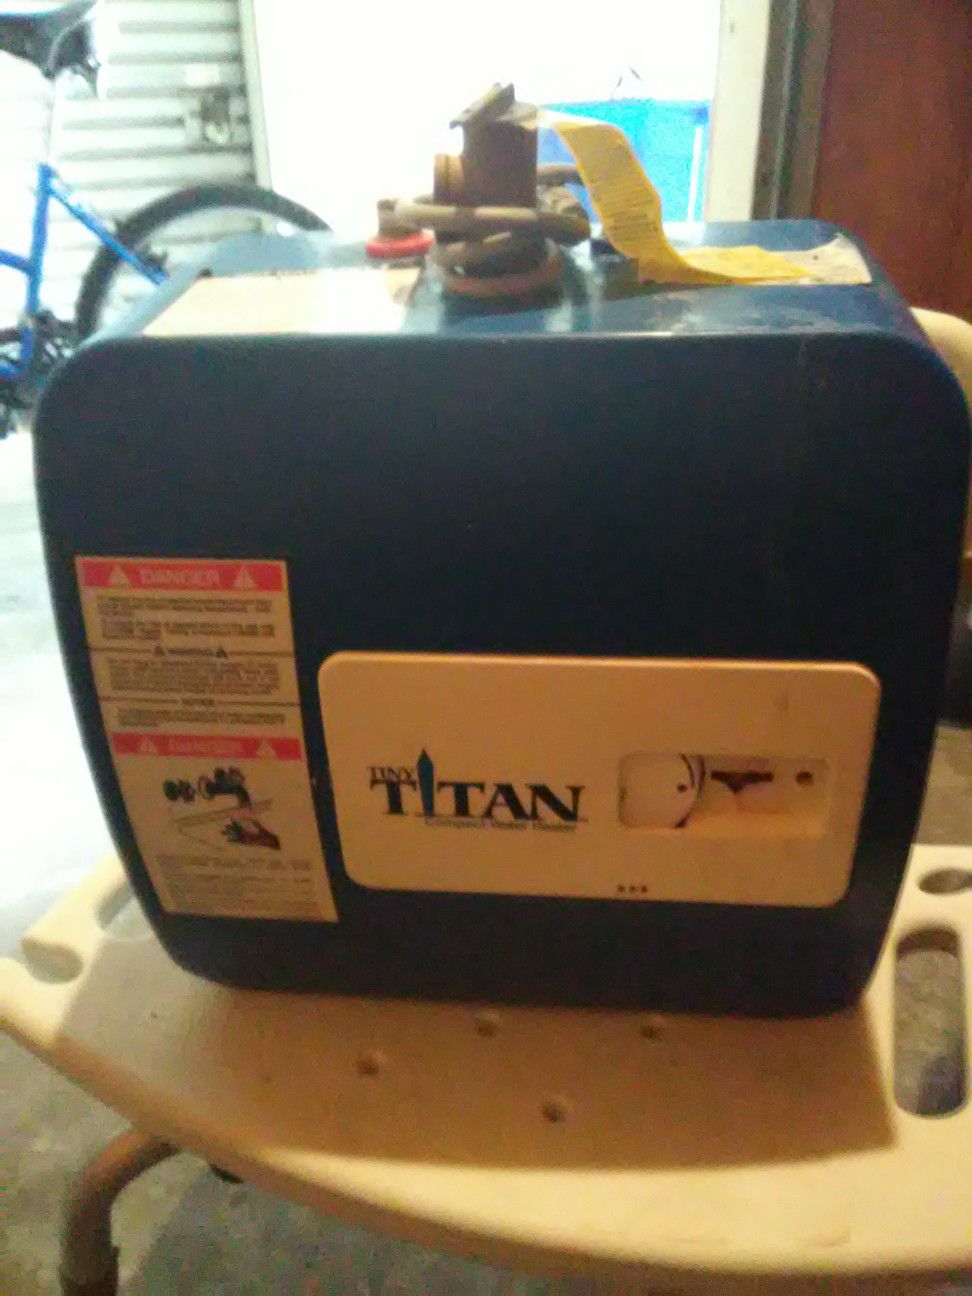 TITAN compact hot water heater